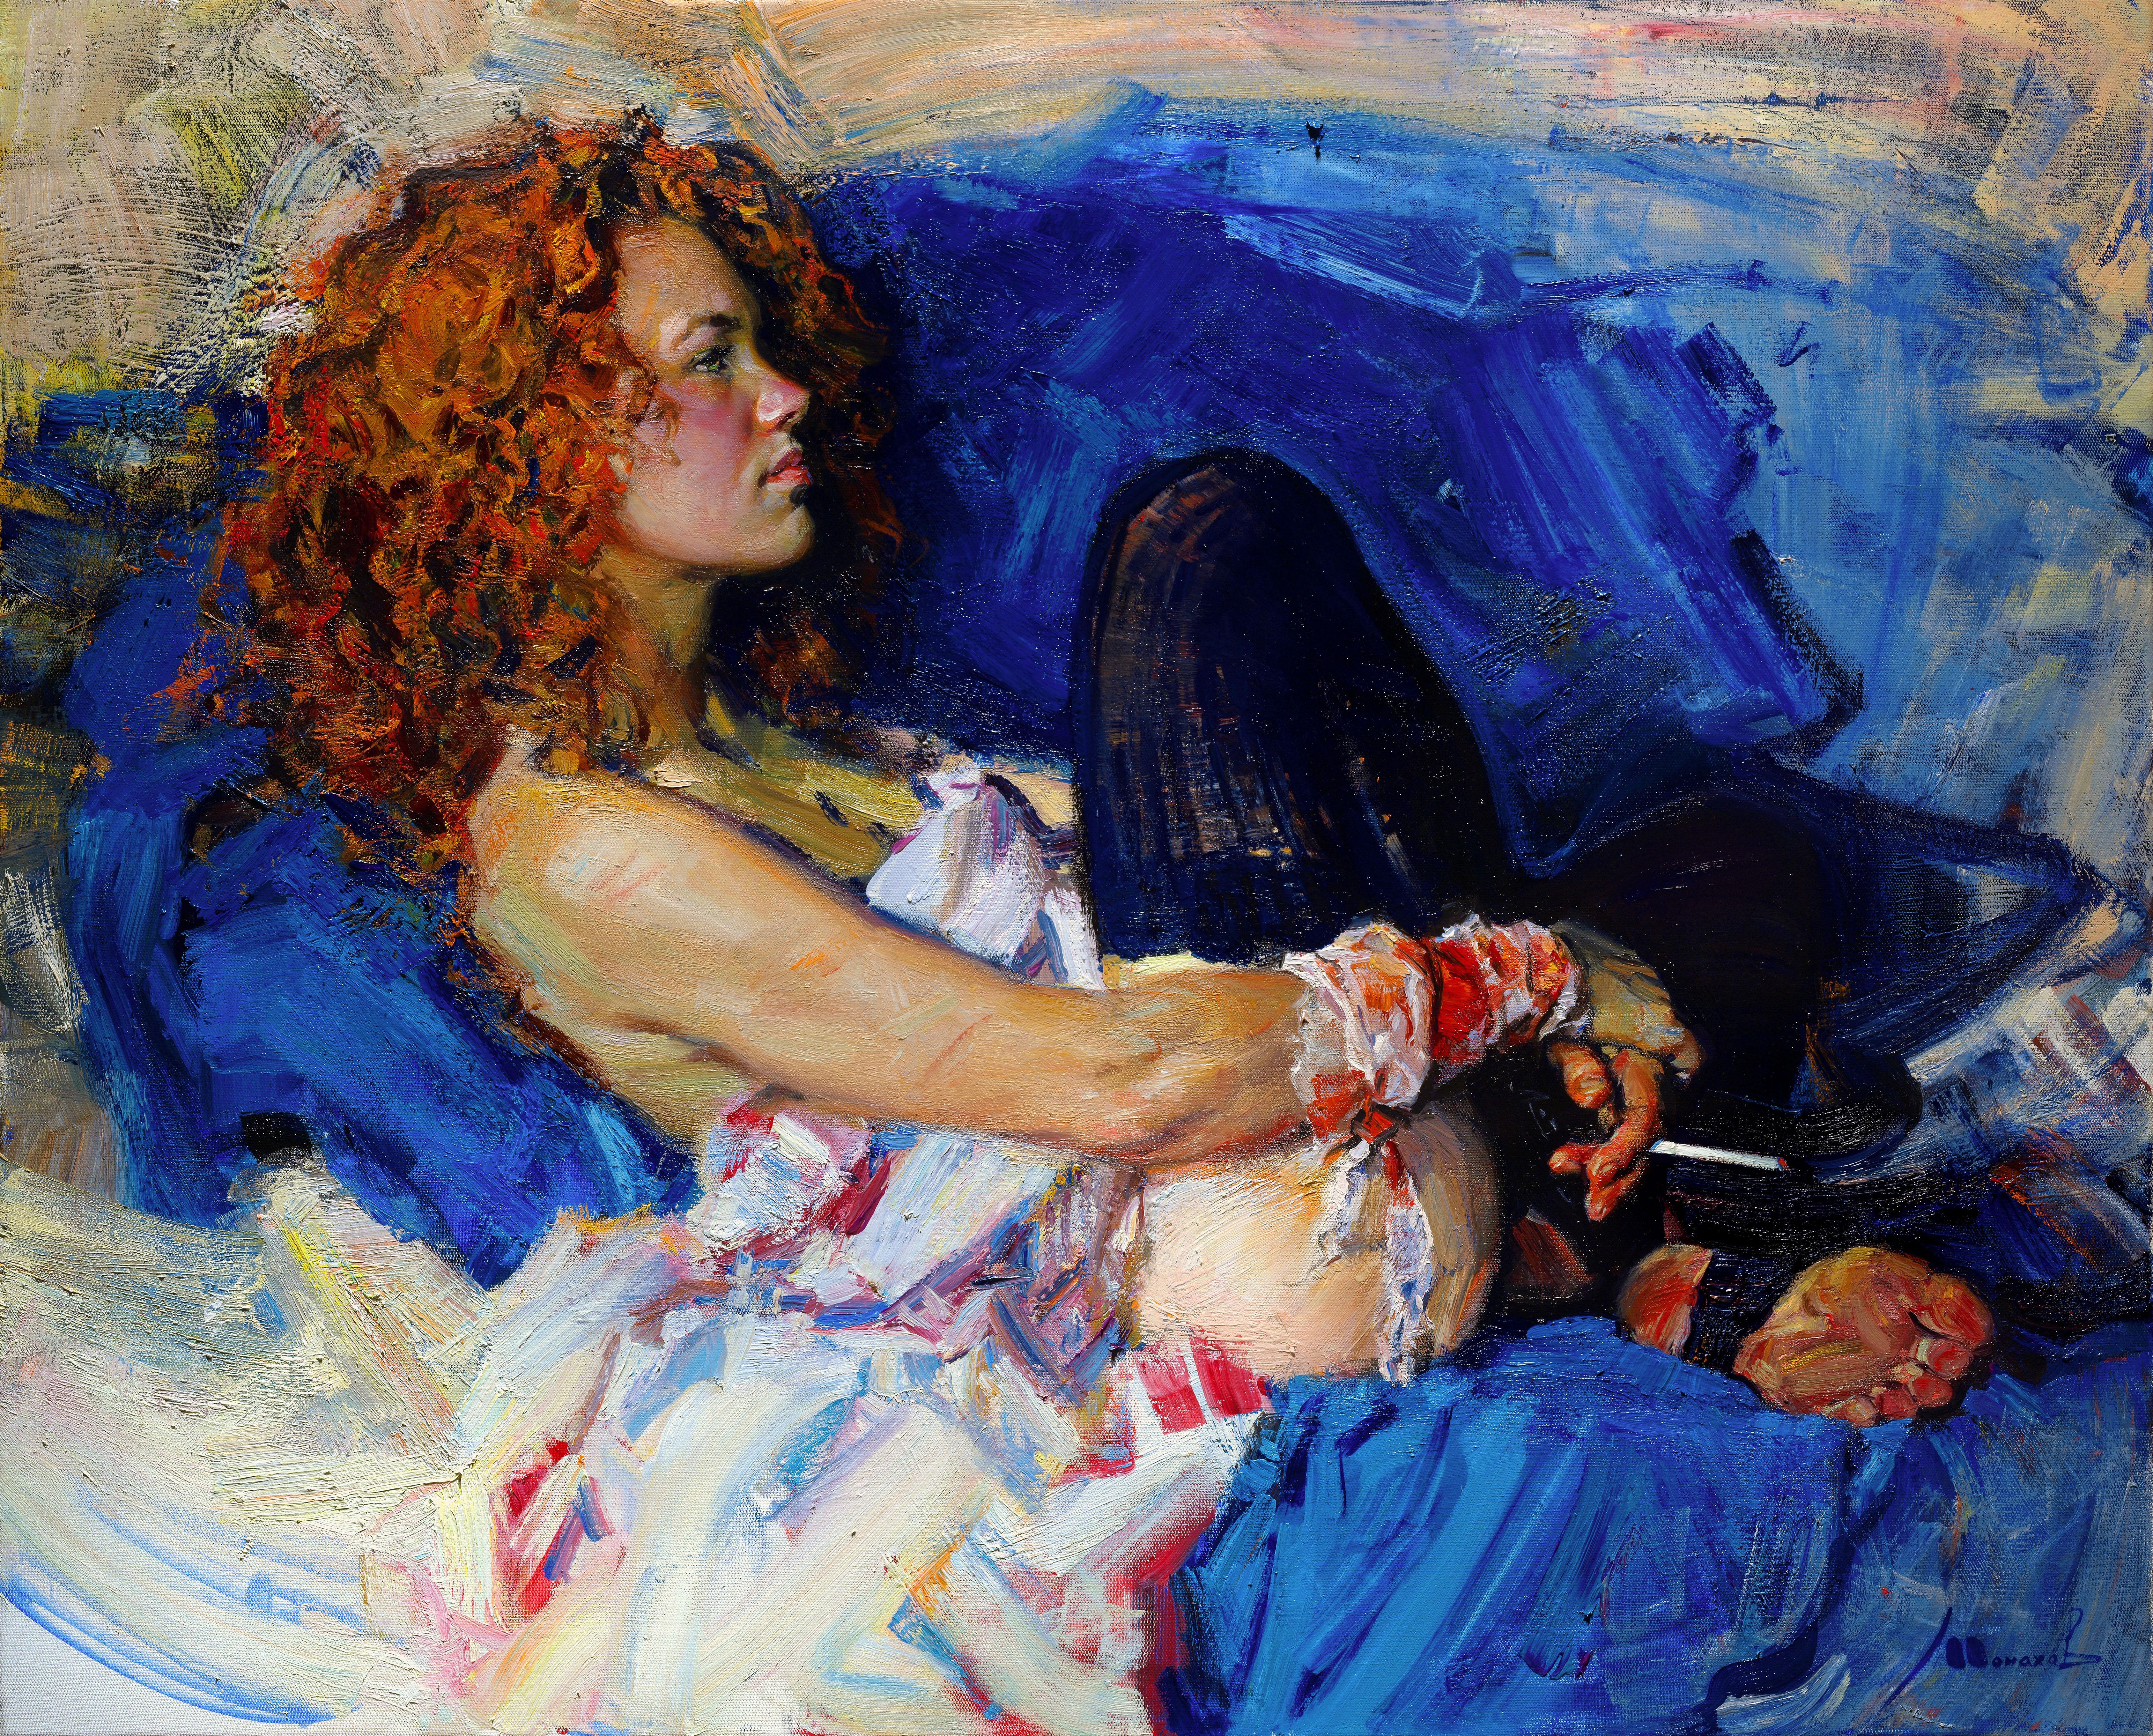 Evgeniy Monahov Nude Painting - The dreamer